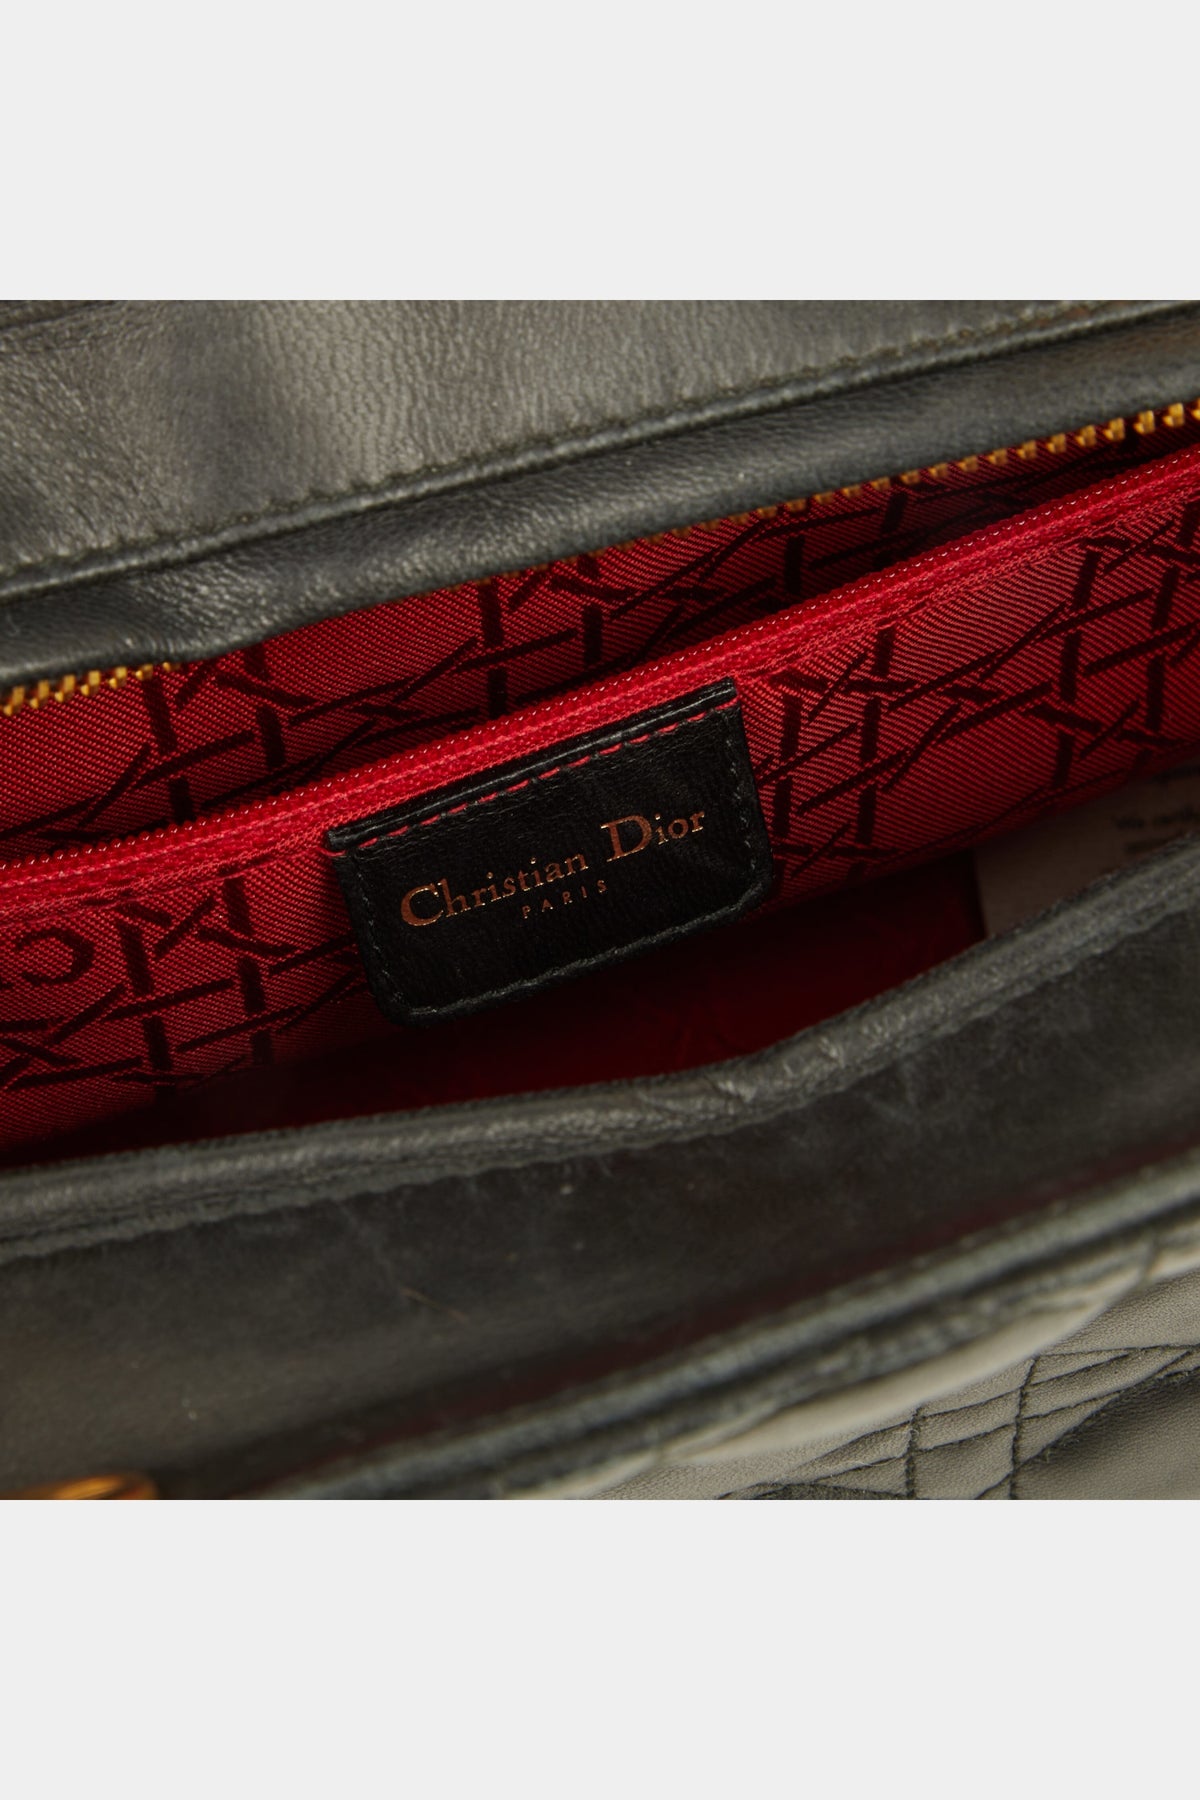 Christian Dior One Zip Handbags